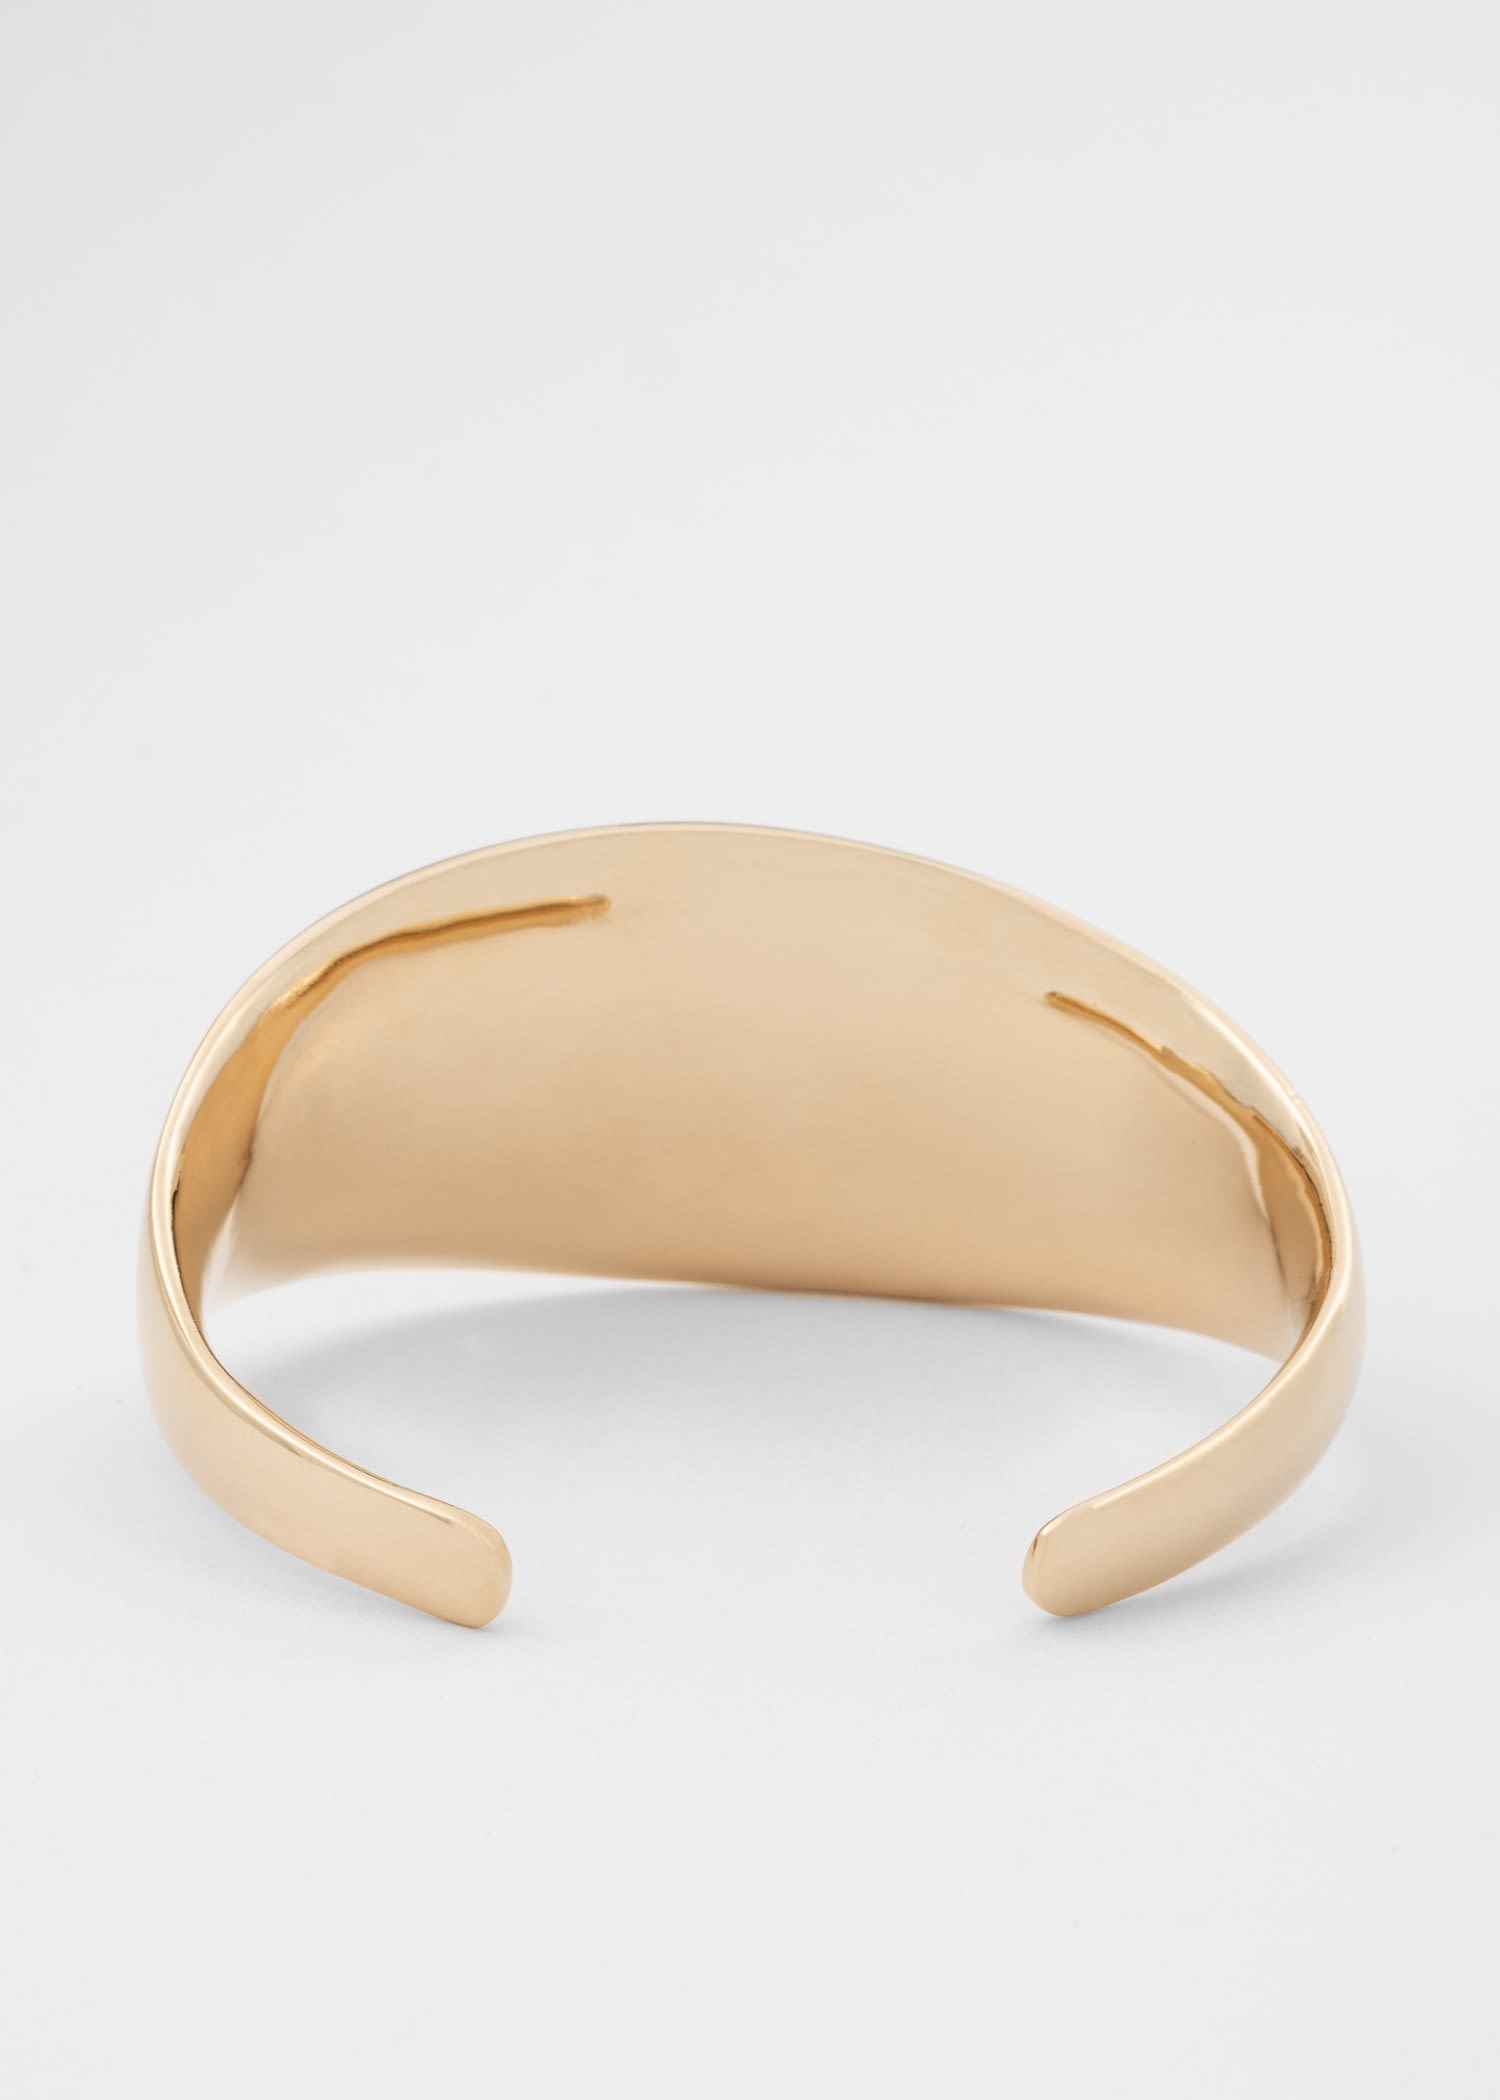 'Anna' Cuff Bracelet by Helena Rohner - 3